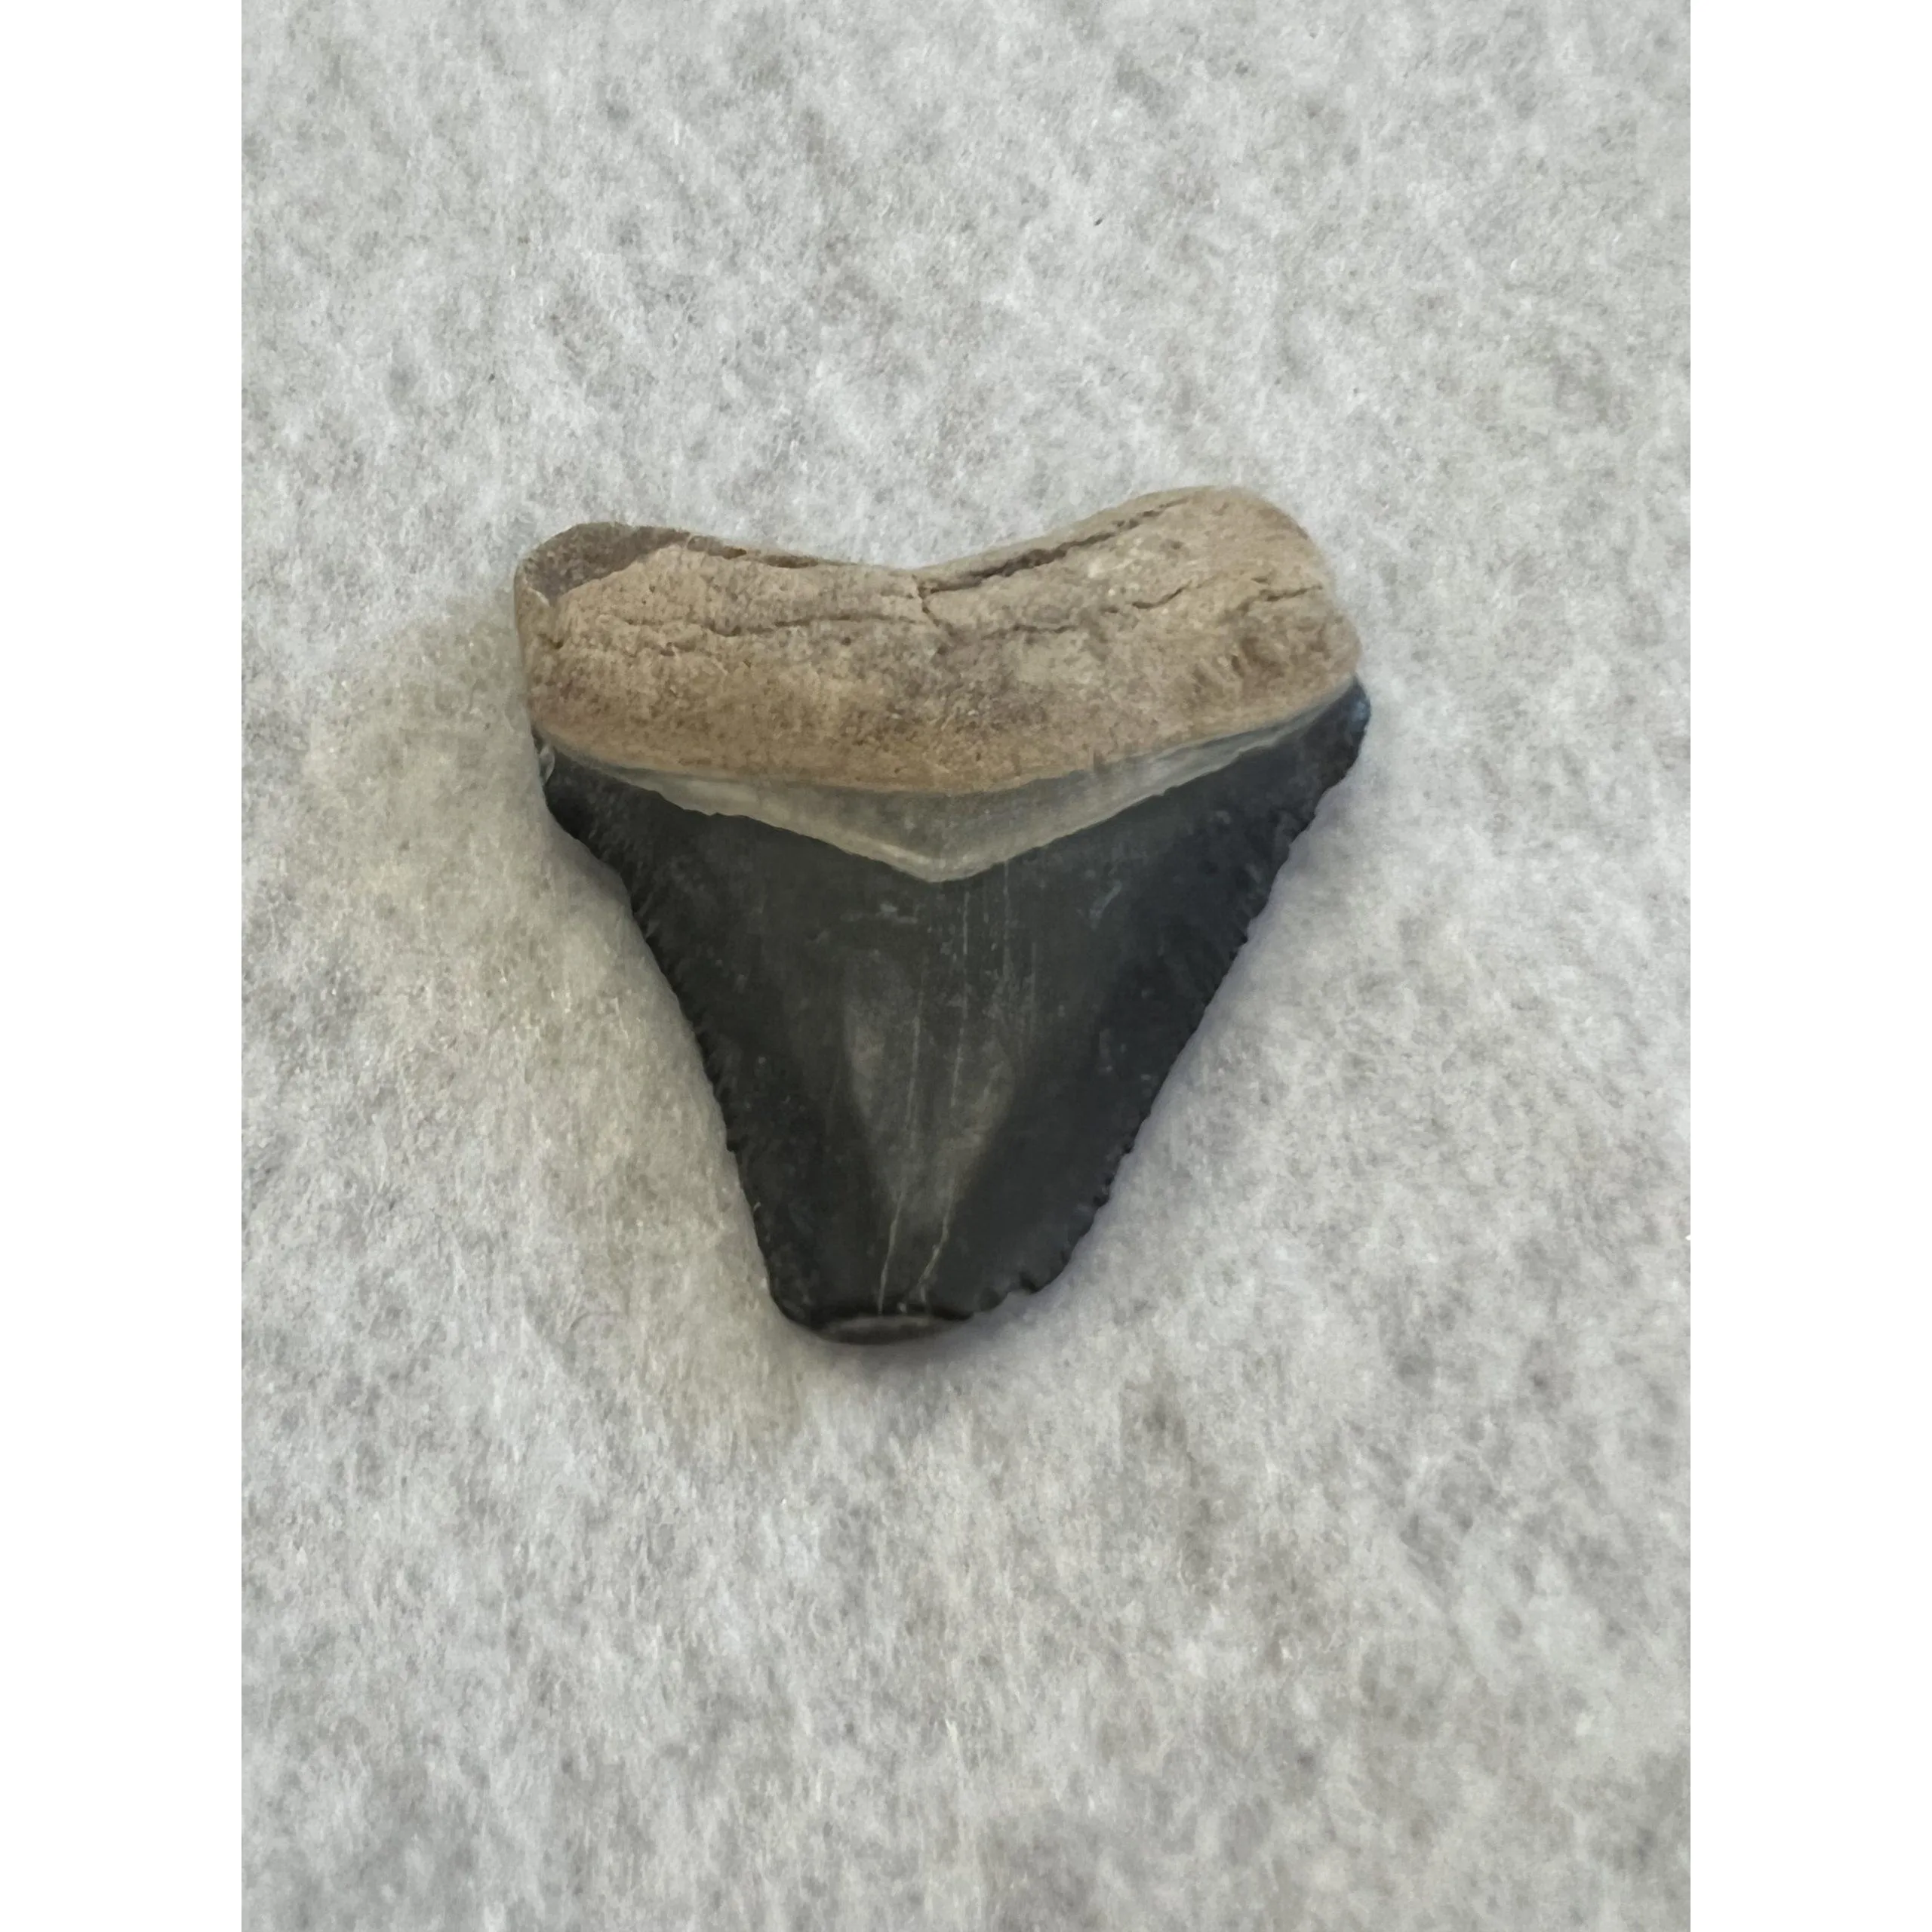 Megalodon Tooth, Bone Valley, Florida, 1.83 inch Prehistoric Online